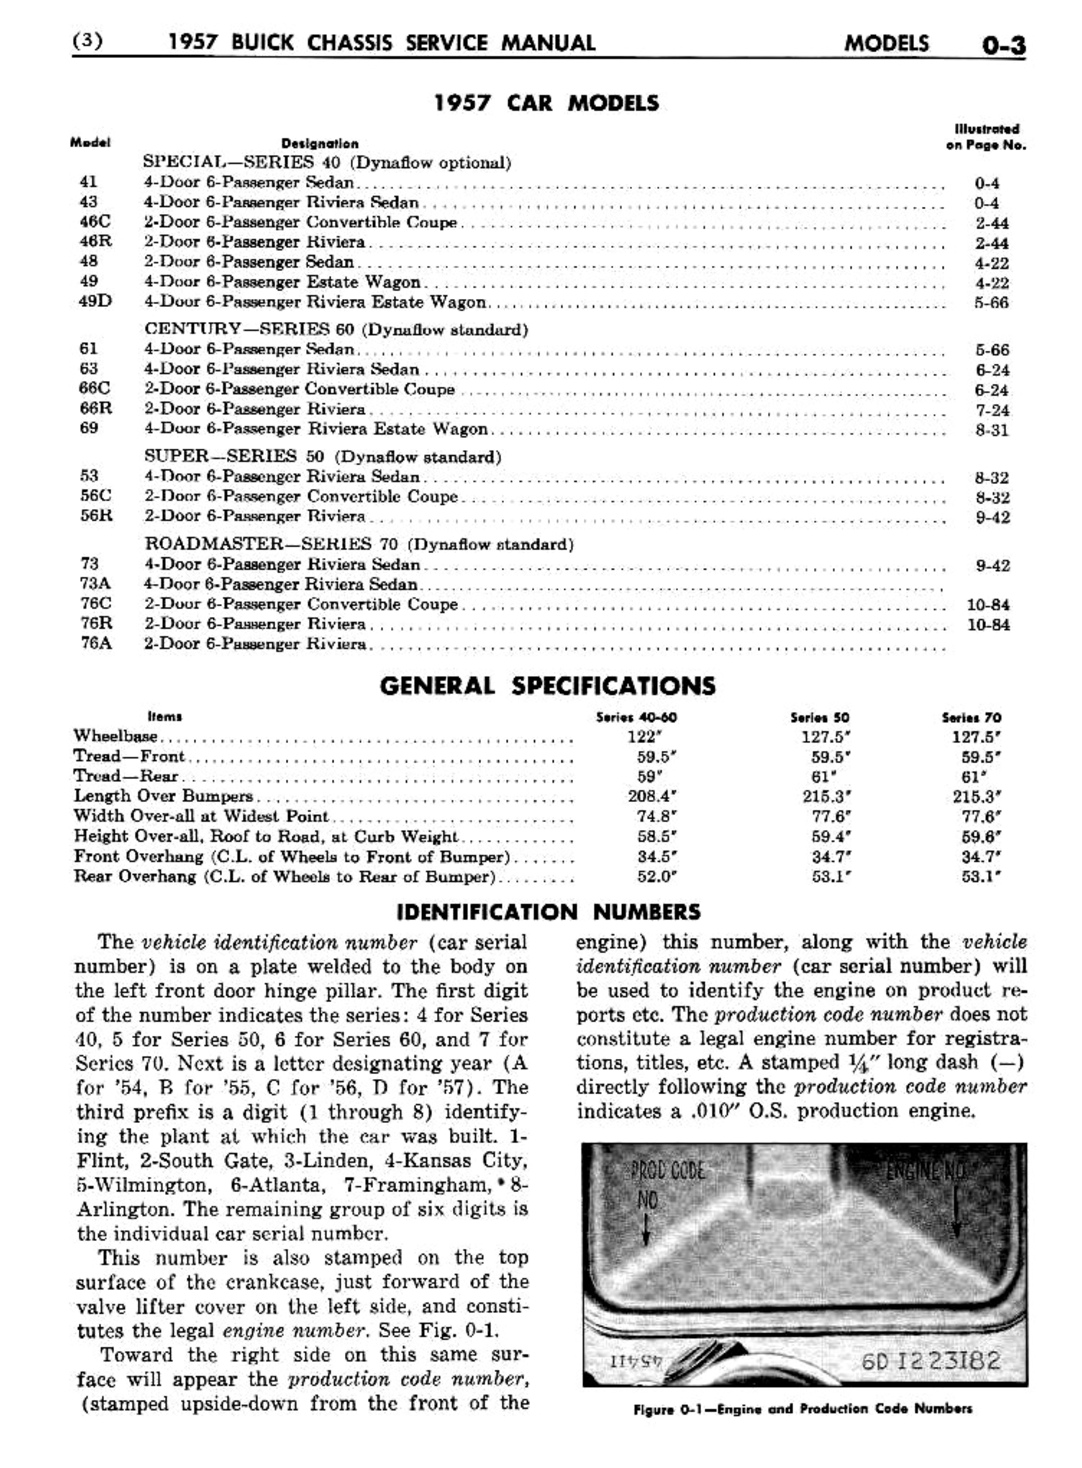 n_01 1957 Buick Shop Manual - Gen Information-005-005.jpg